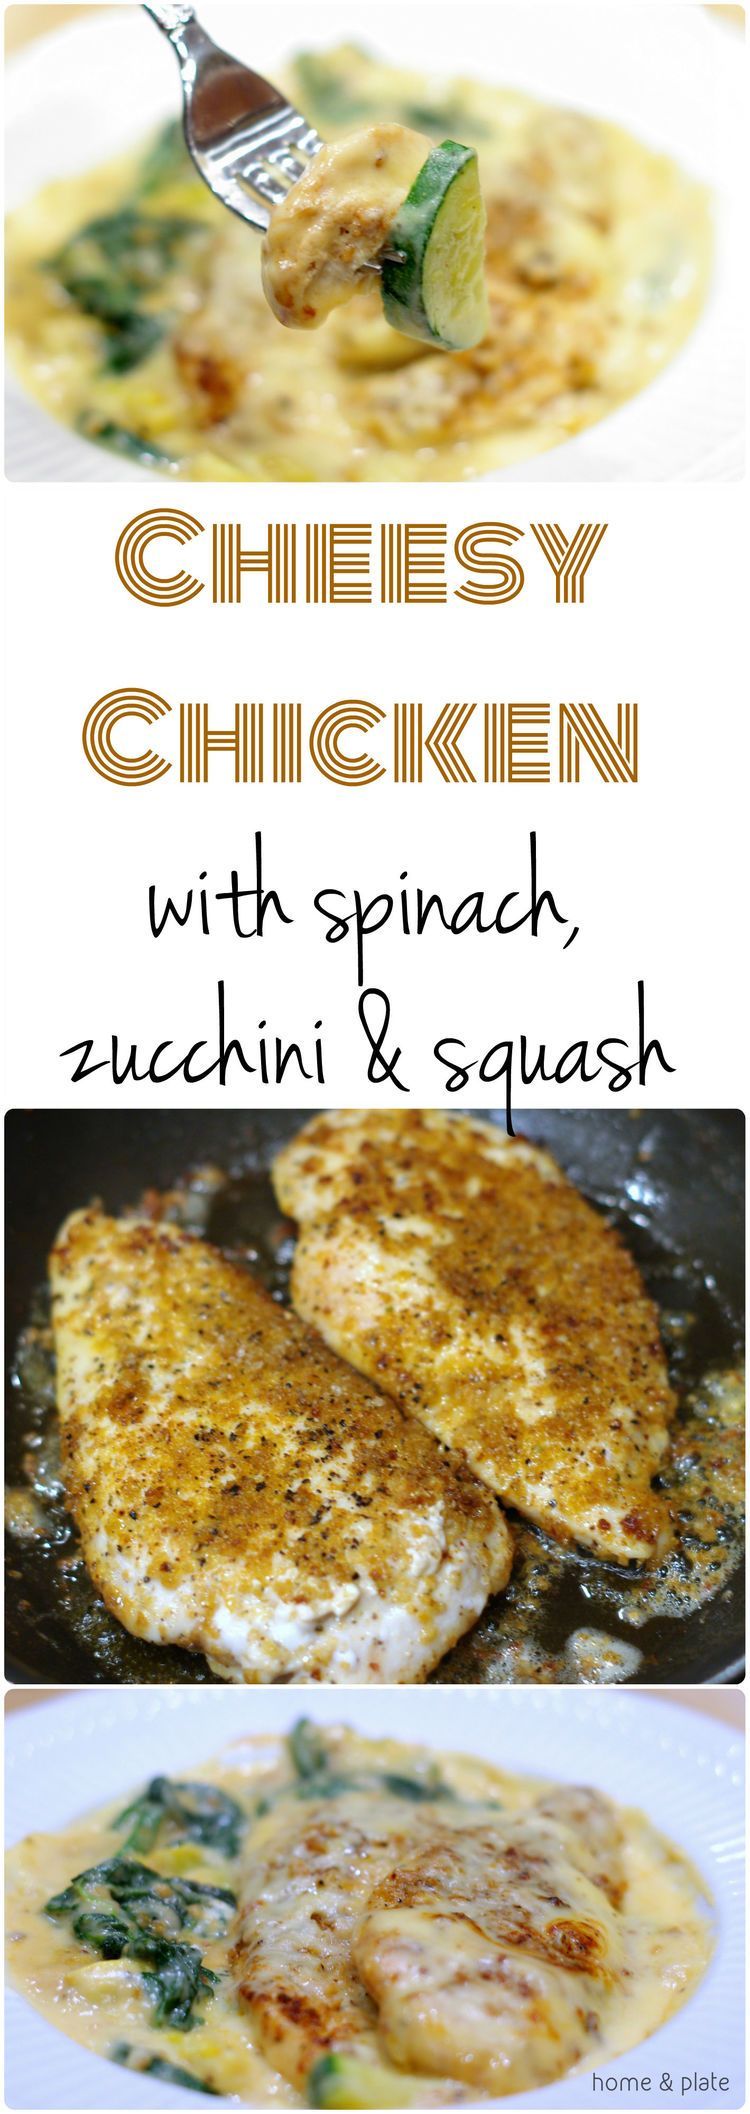 Cheesy Chicken with Spinach, Zucchini & Squash | Home & Plate | www.homeandplate.com | Perfect chicken